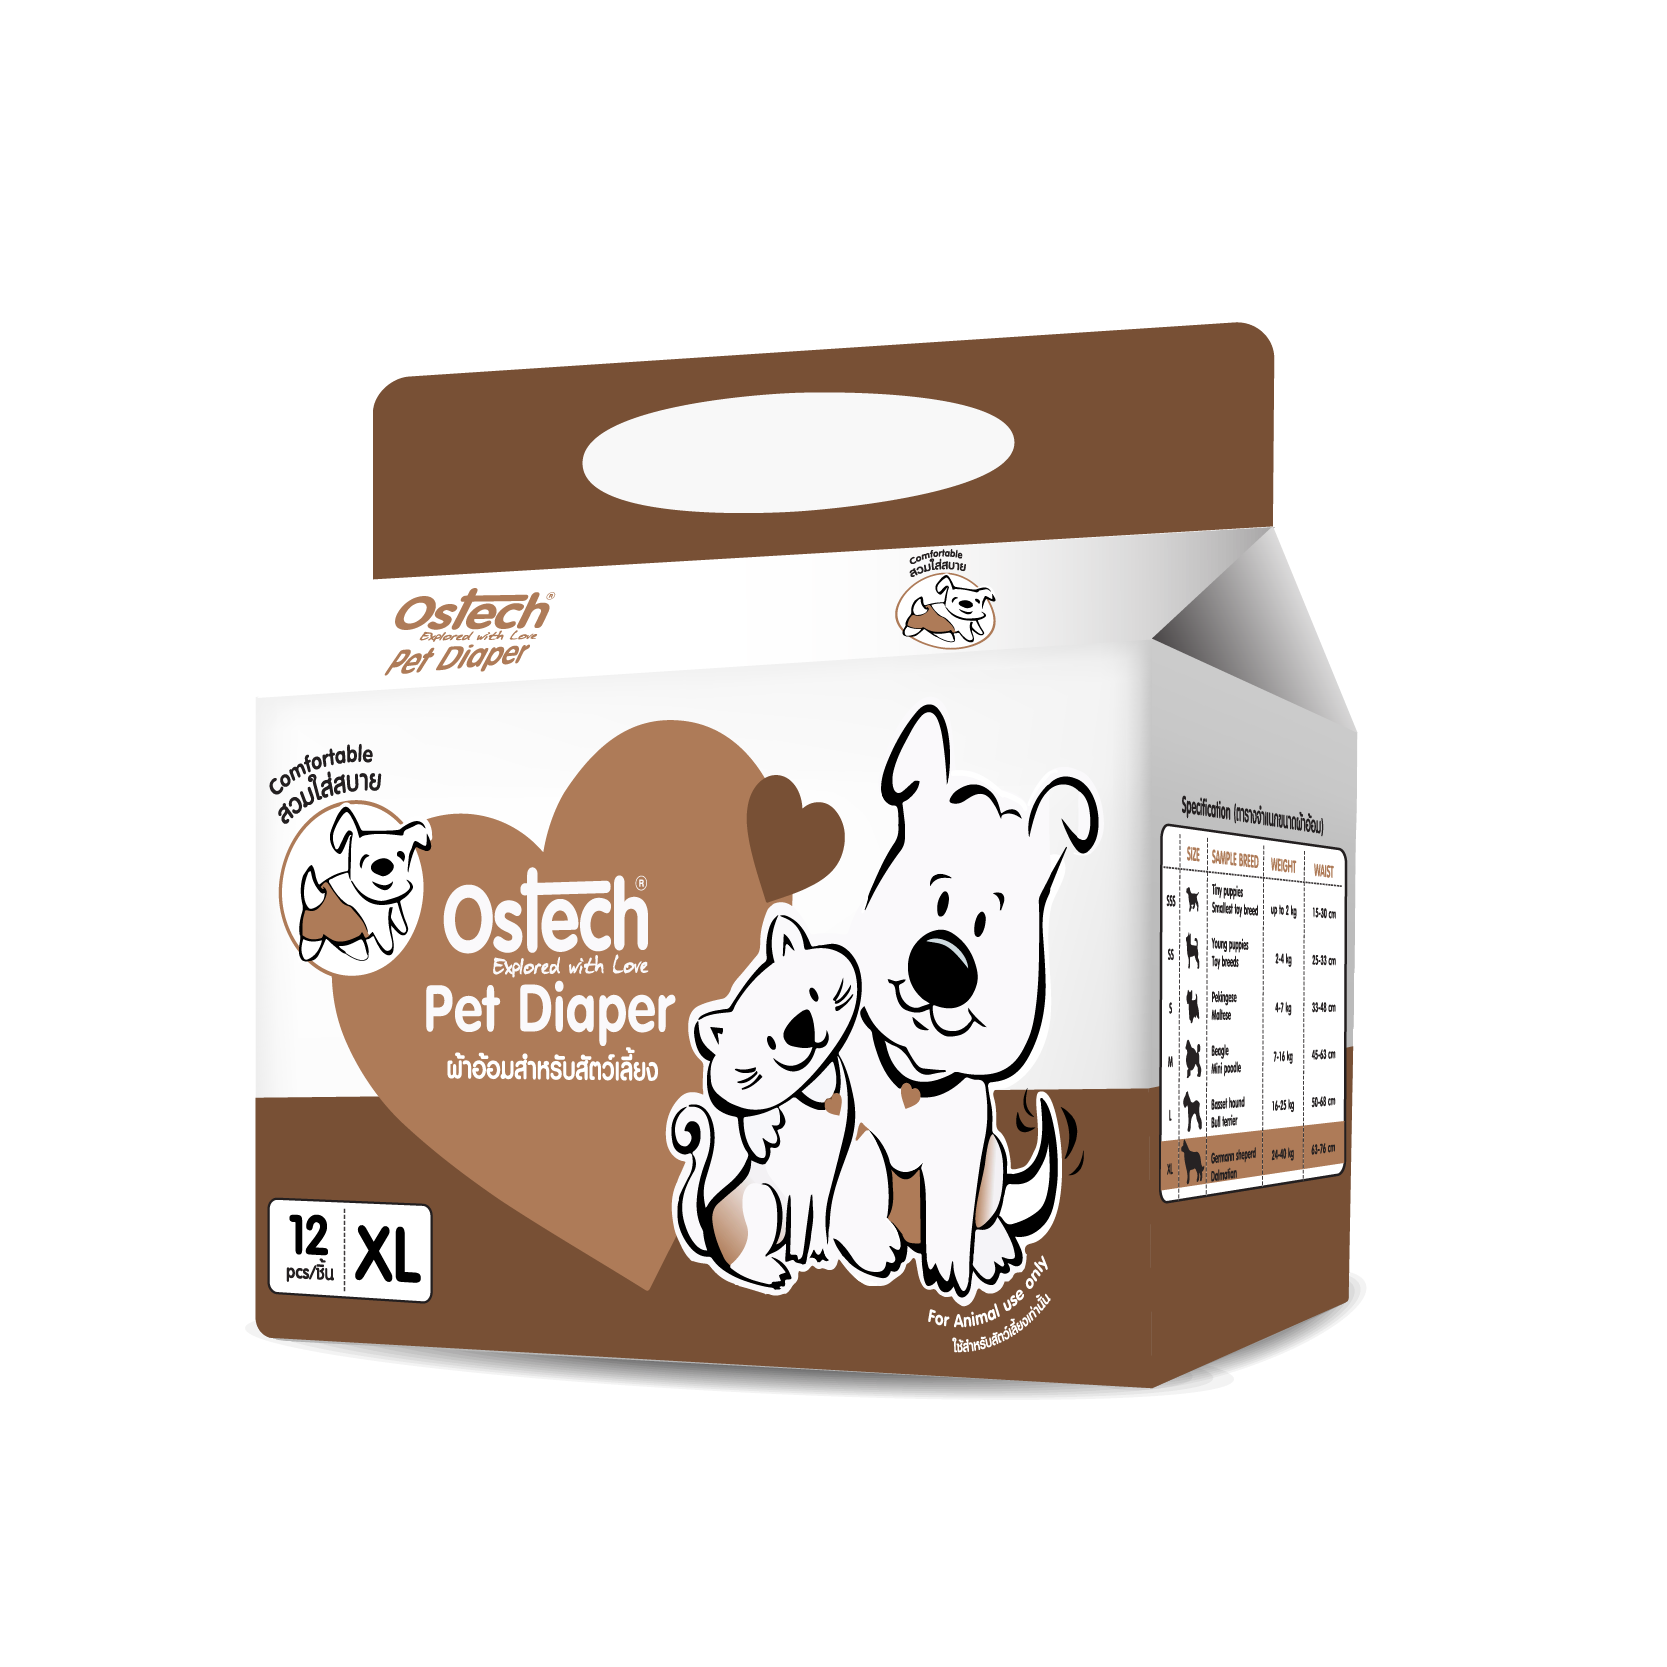 Pet Diaper ผ้าอ้อมสำหรับสัตว์เลี้ยง ออสเทค Size XL